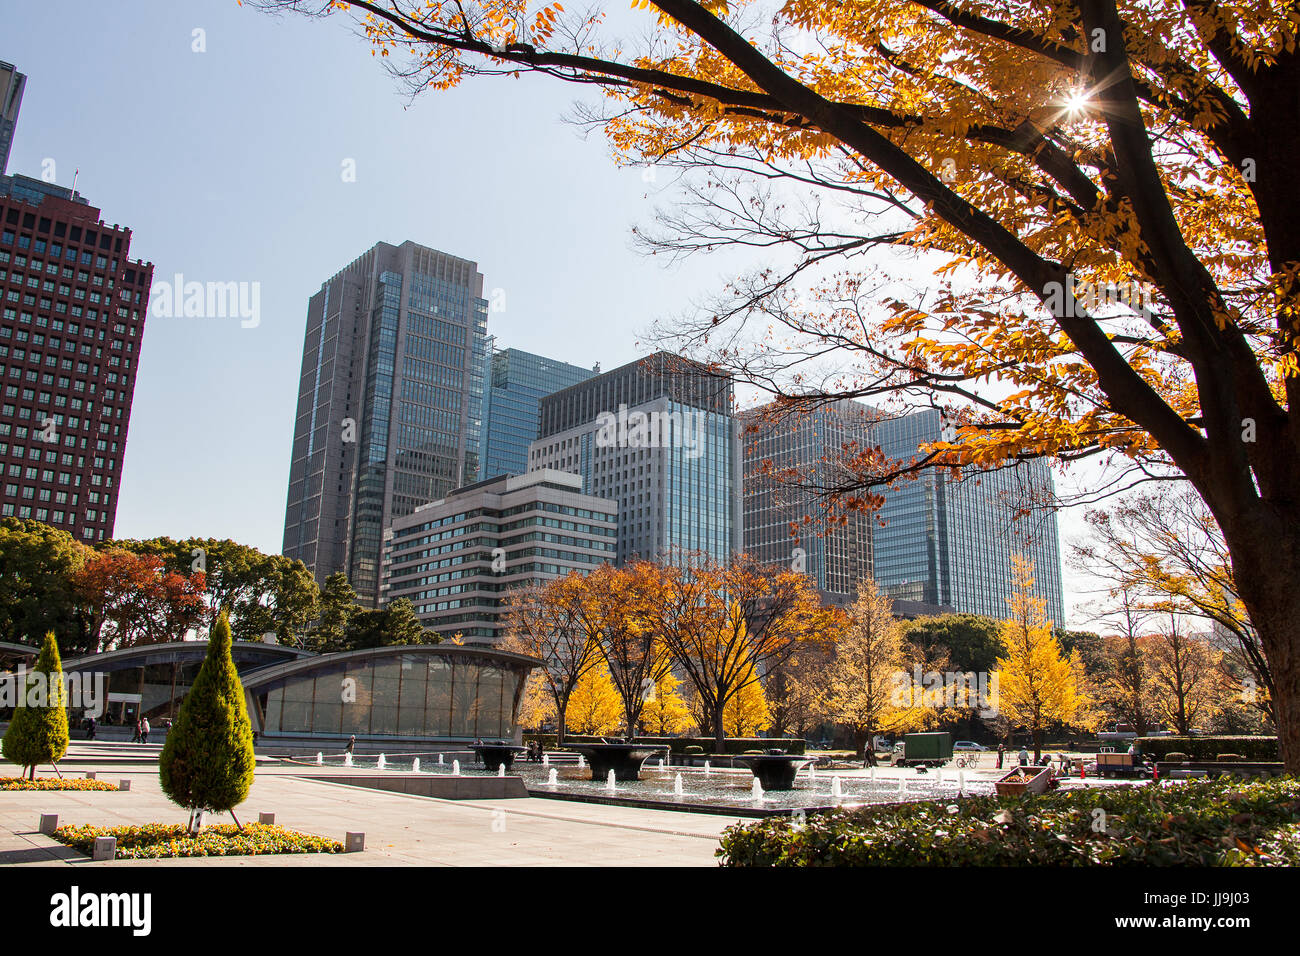 Wadakura Fountain Park glows golden with the colors of autumn, Tokyo, Japan. Stock Photo